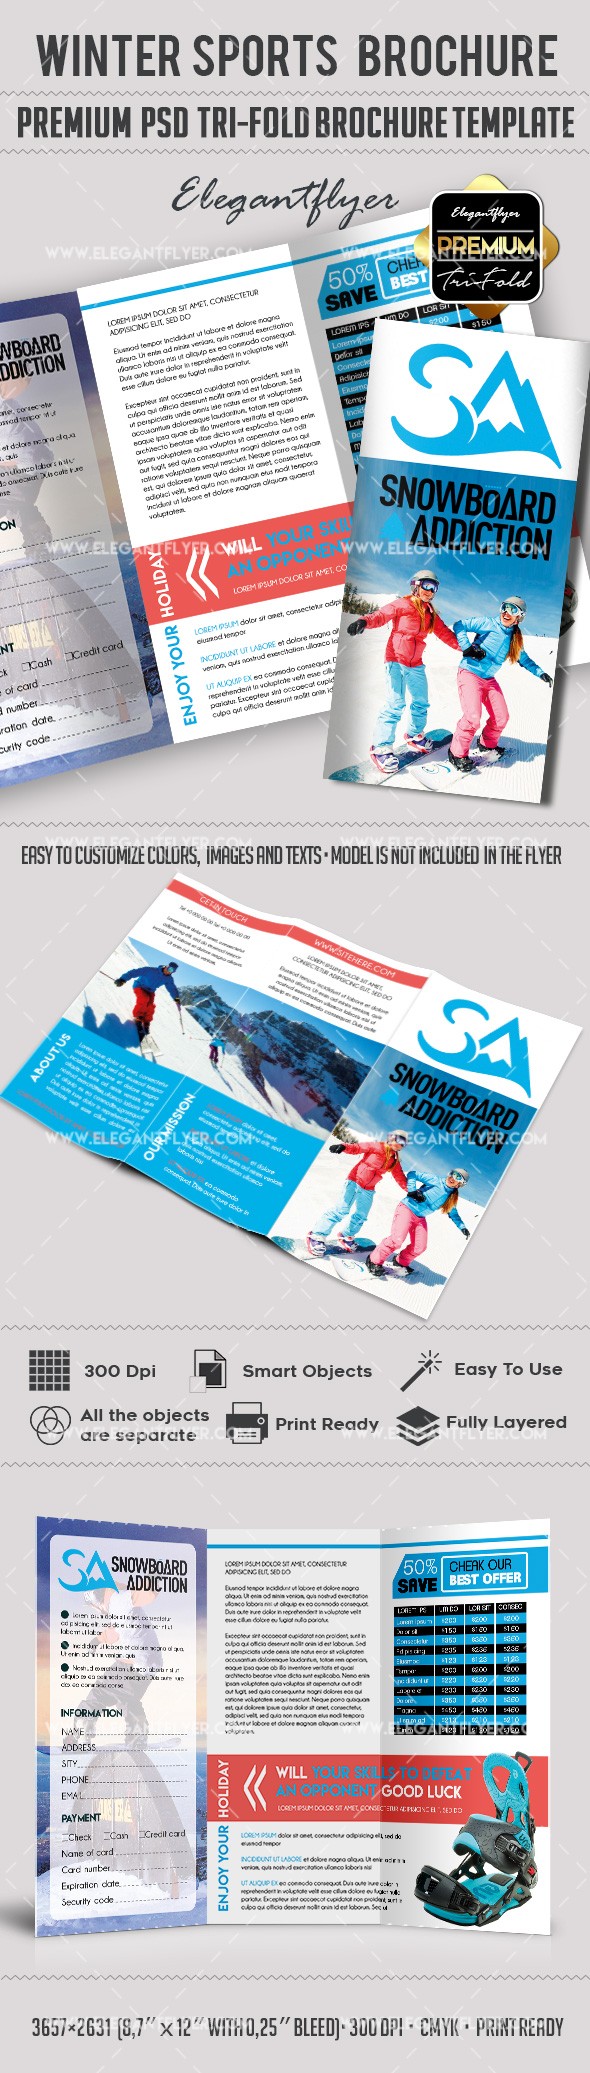 Ski&Snowboard --> Sci e snowboard by ElegantFlyer